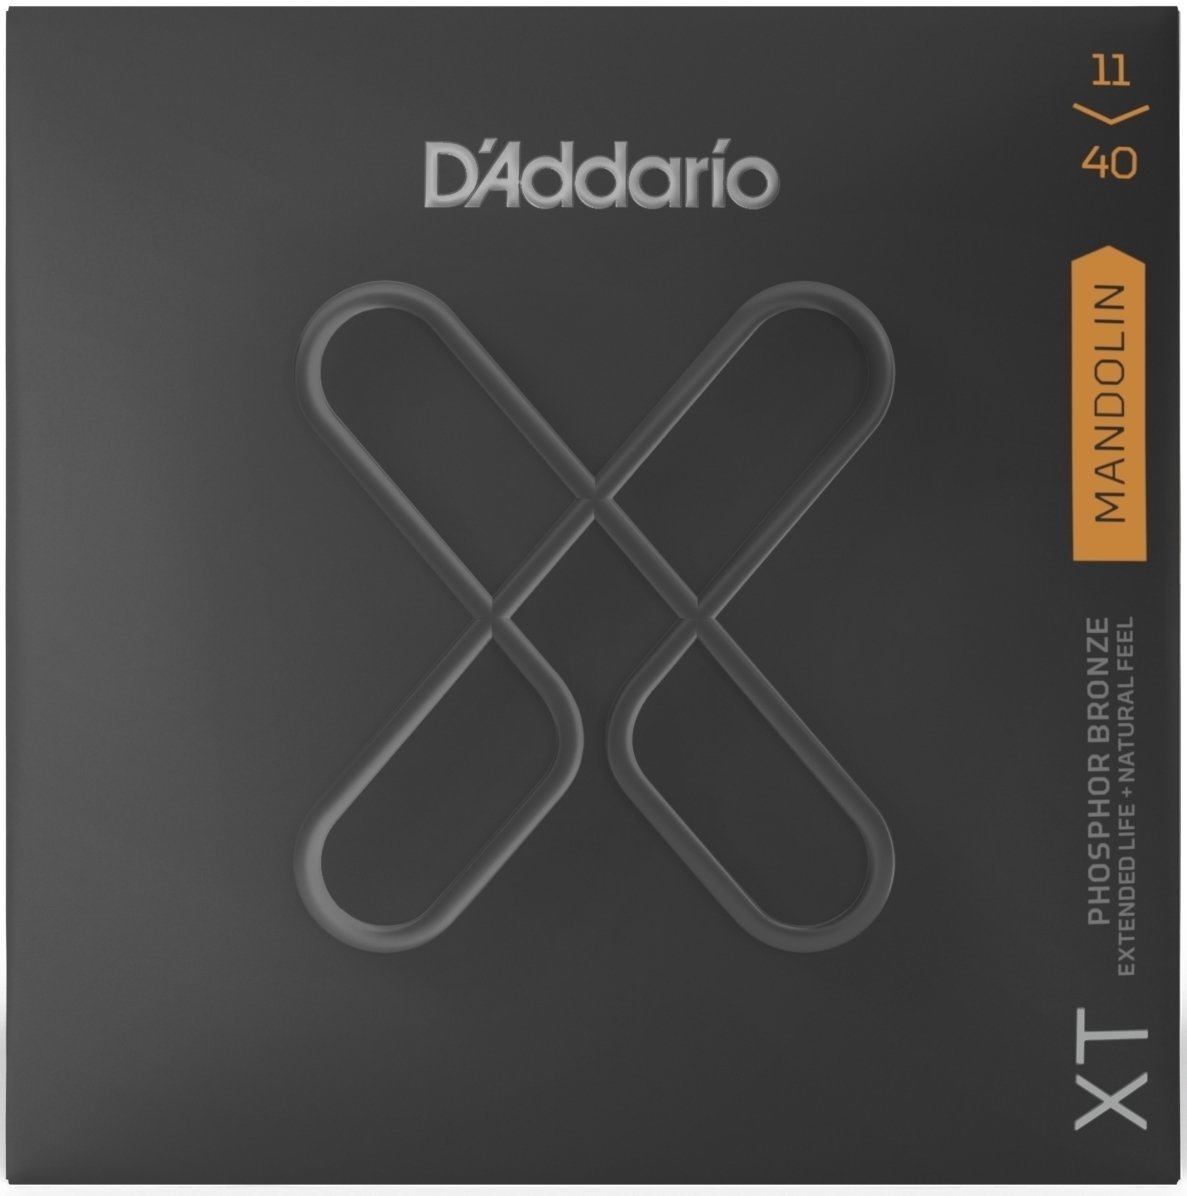 Mandoline Strings D'Addario XTM1140